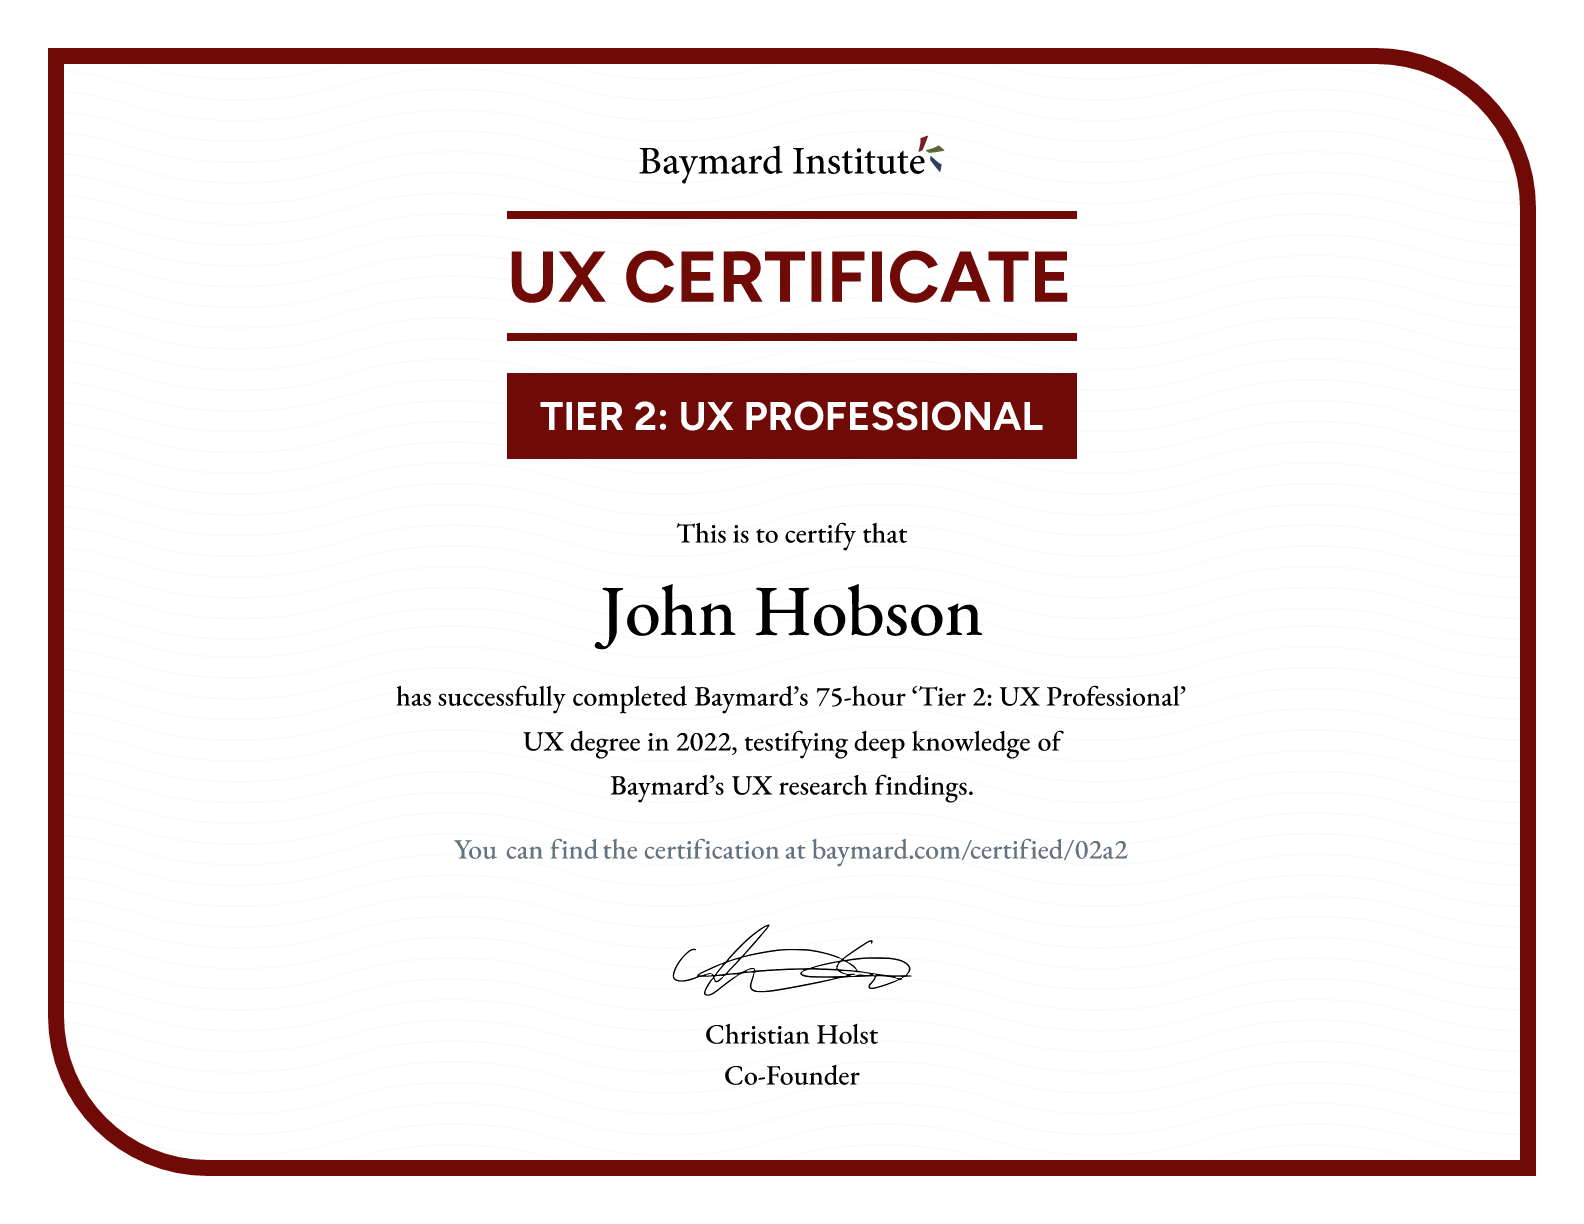 John Hobson’s certificate